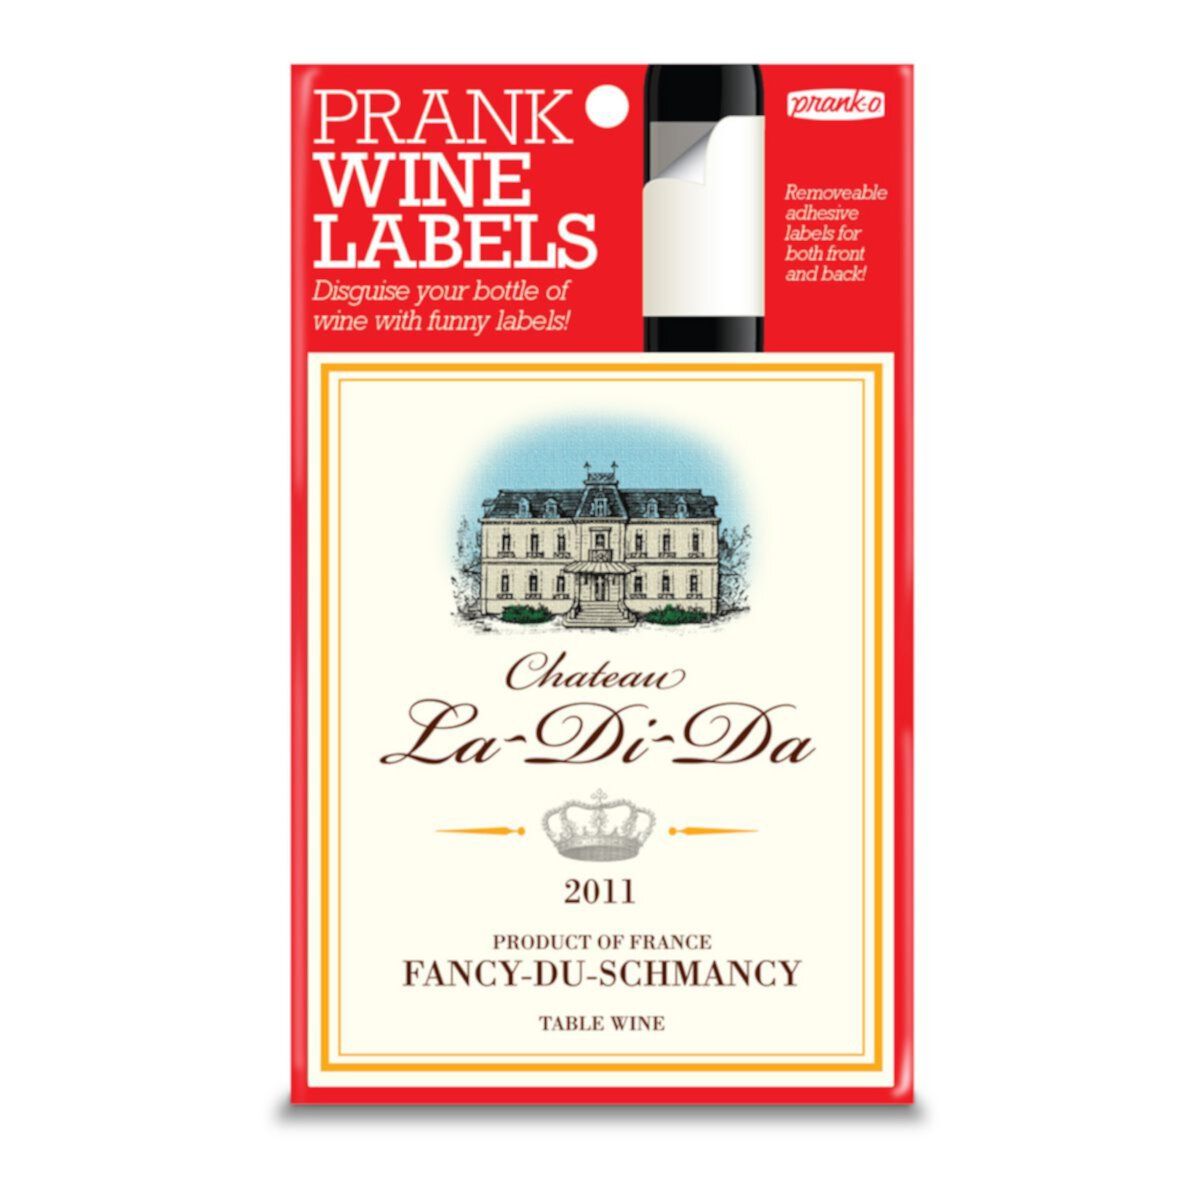 Этикетка вина Prank-O Prank: Chateau La Di Da Prank-O